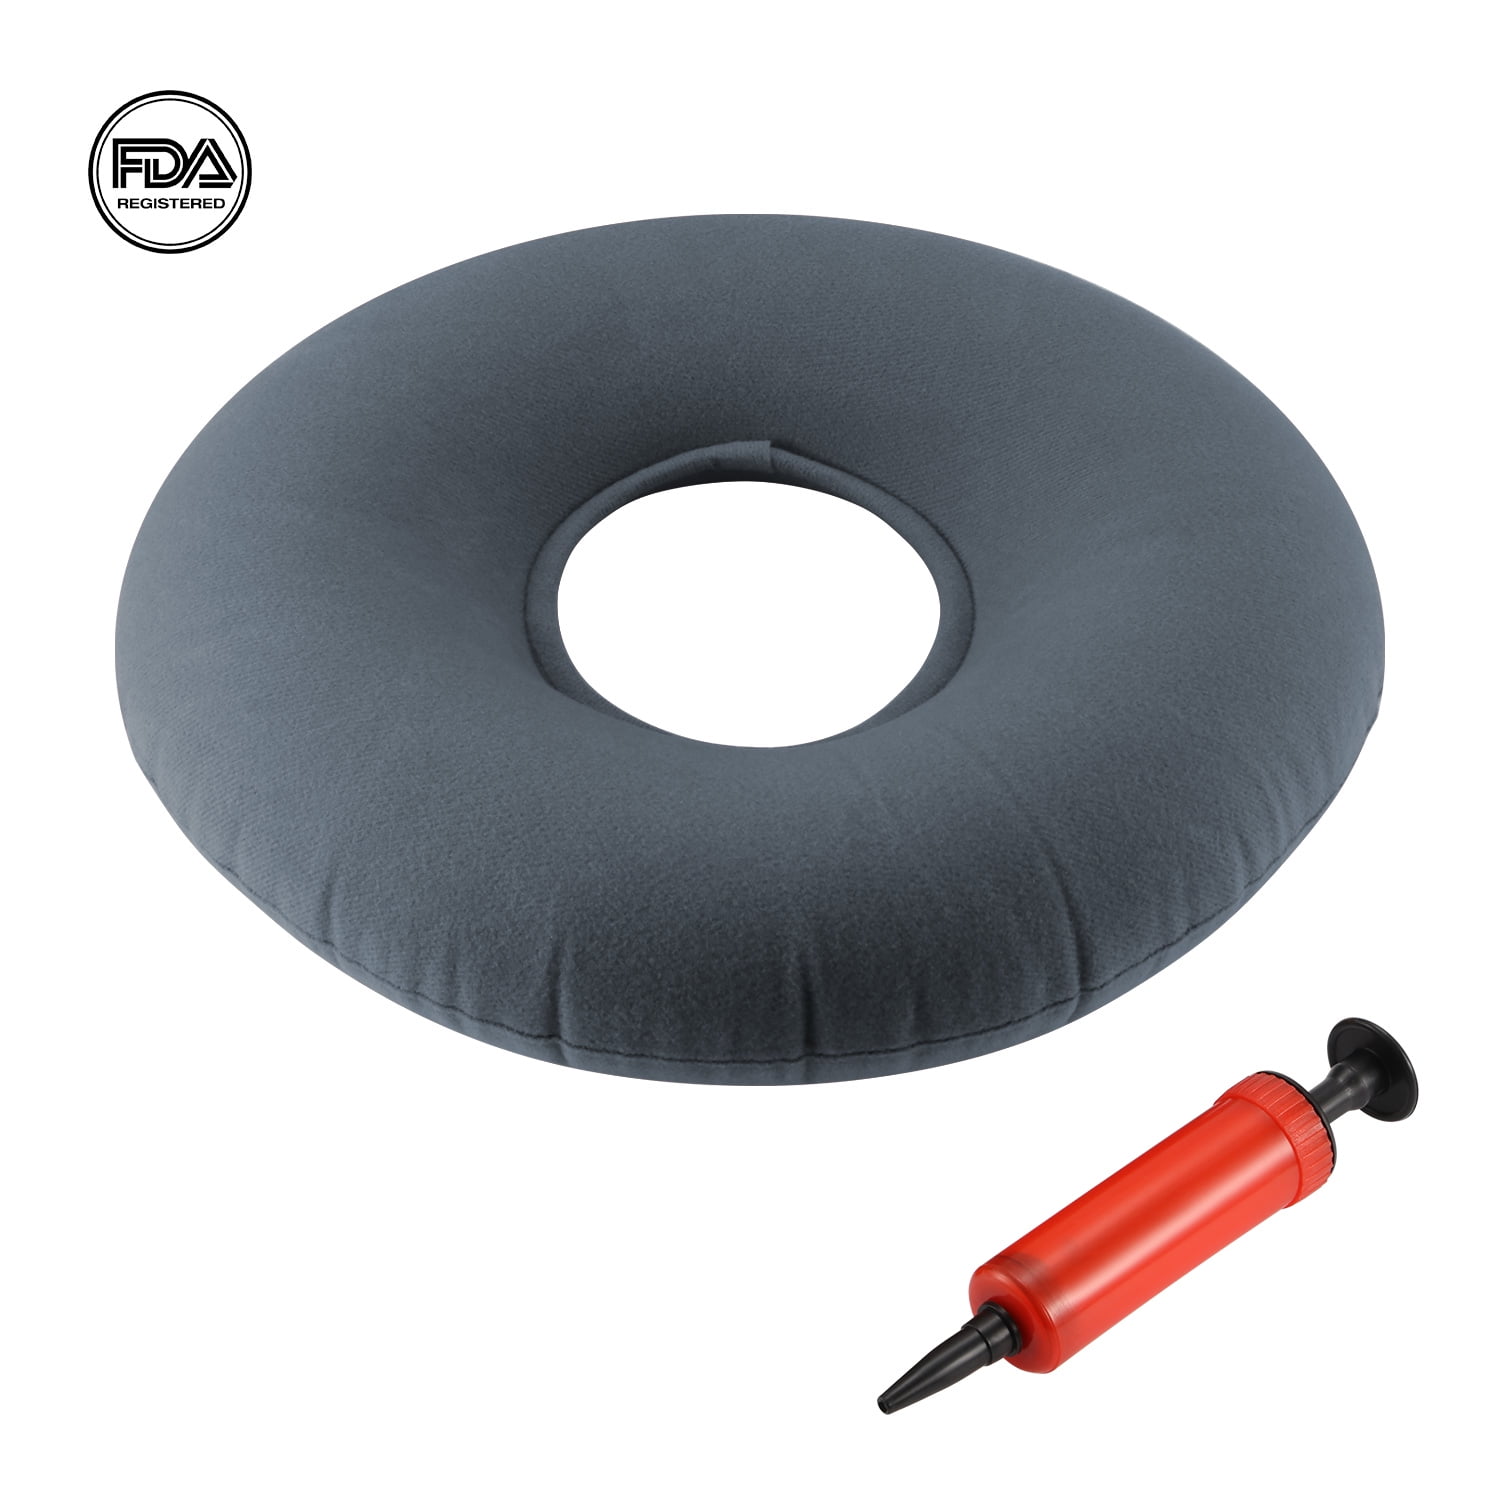 SZXMDKH Hemorrhoid Donut Seat, Inflatable Ring Donut Cushion, Hemorrho –  BABACLICK